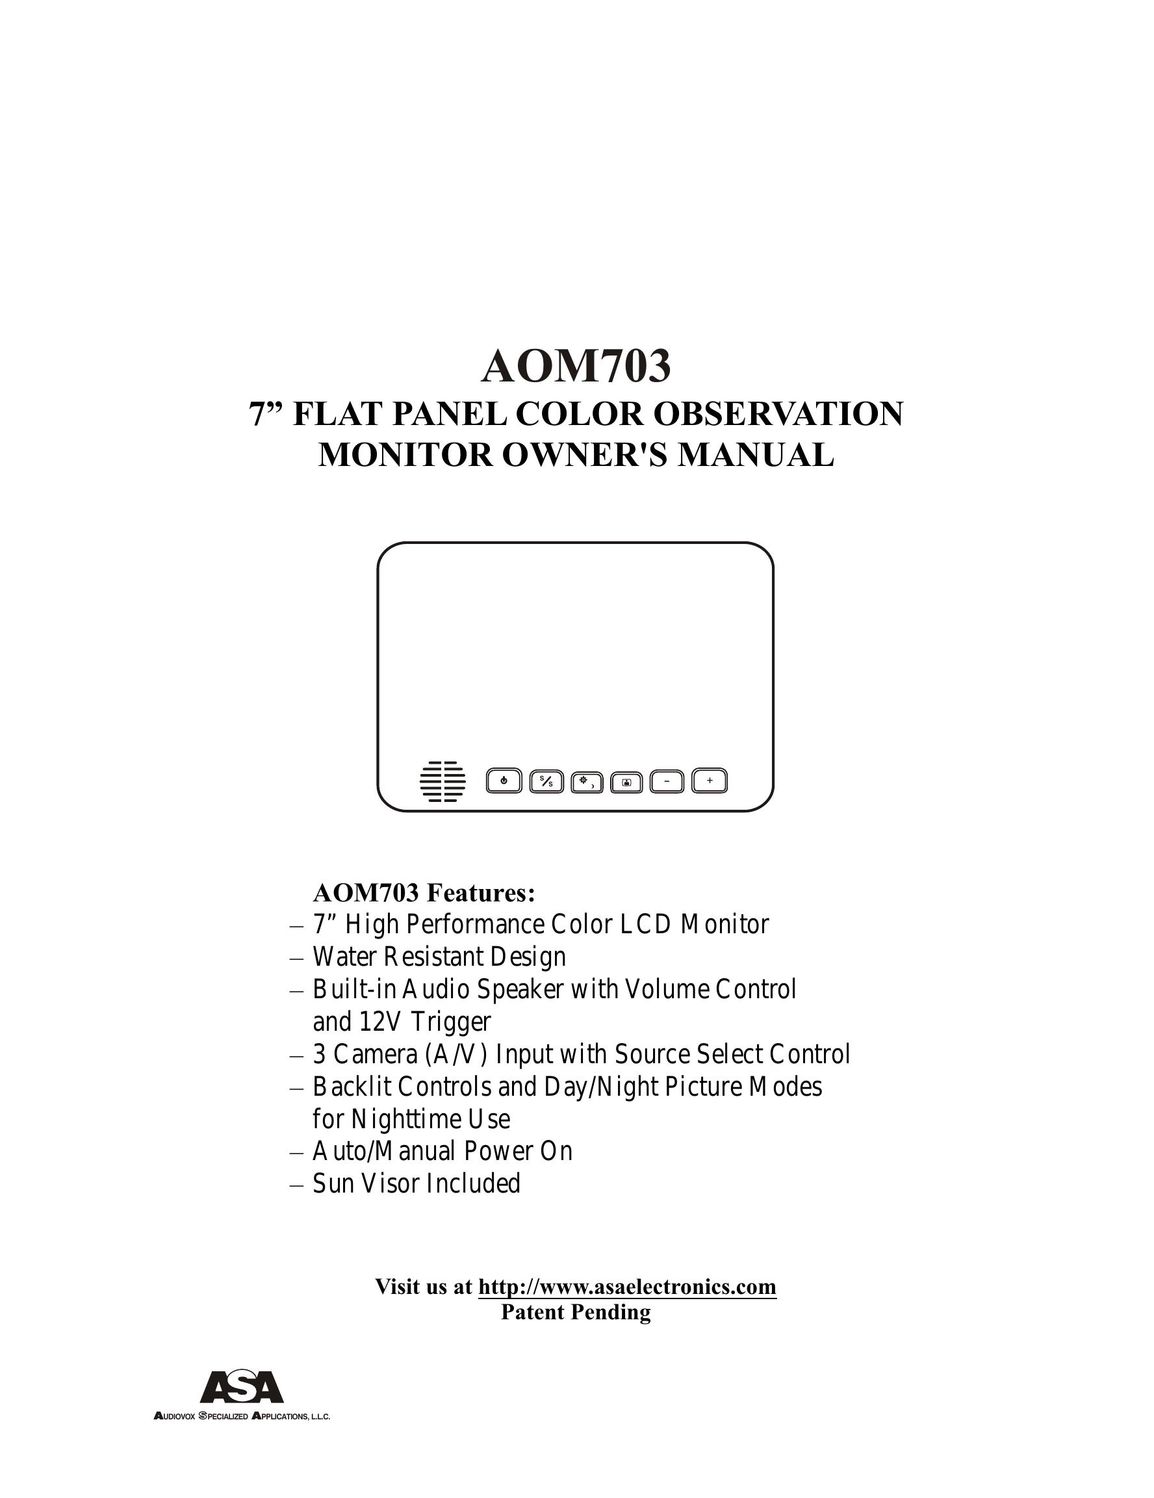 ASA Electronics AOM703 Car Video System User Manual